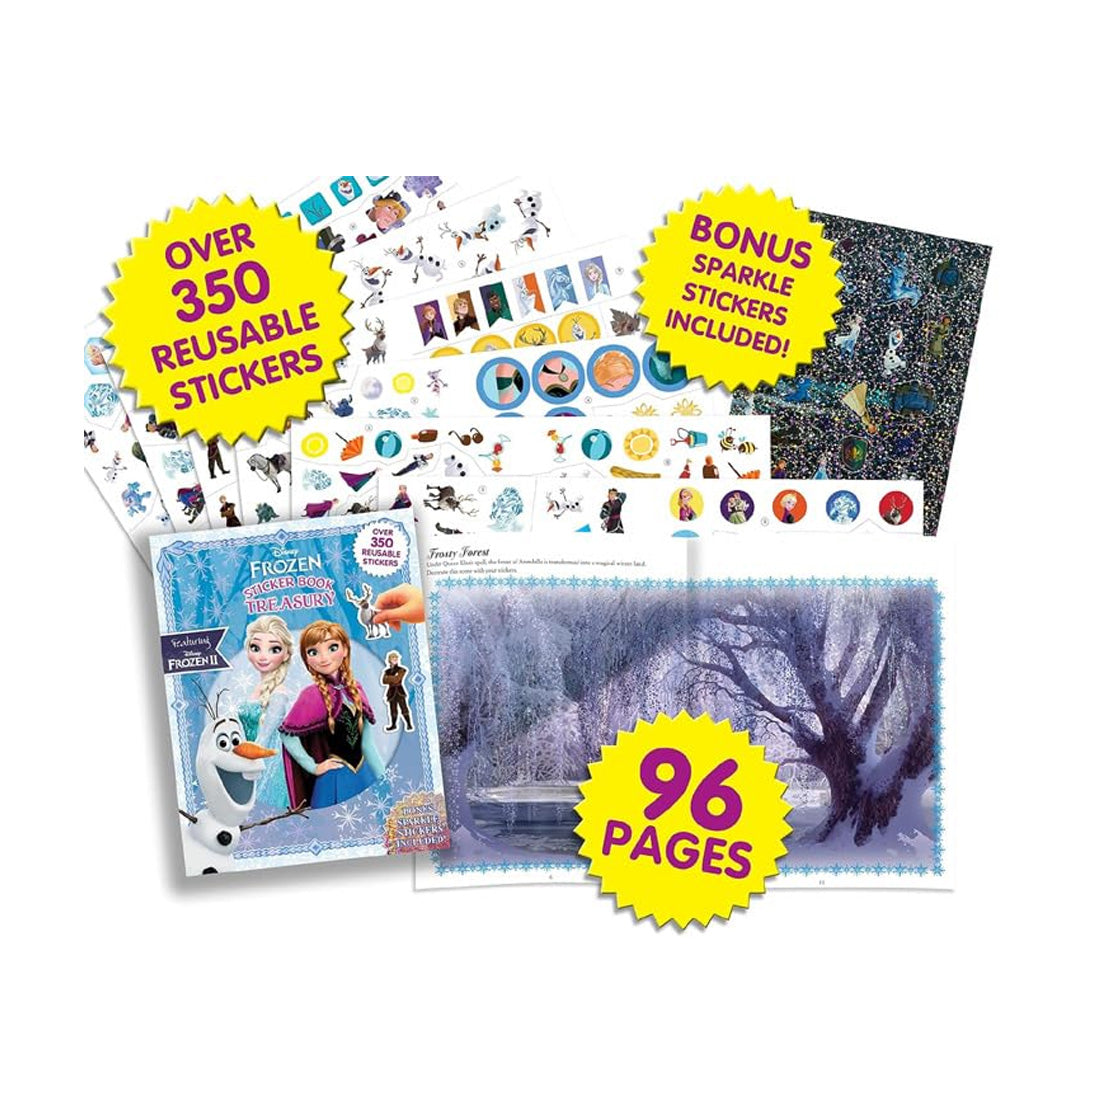 Disney Frozen: Sticker Book Treasury